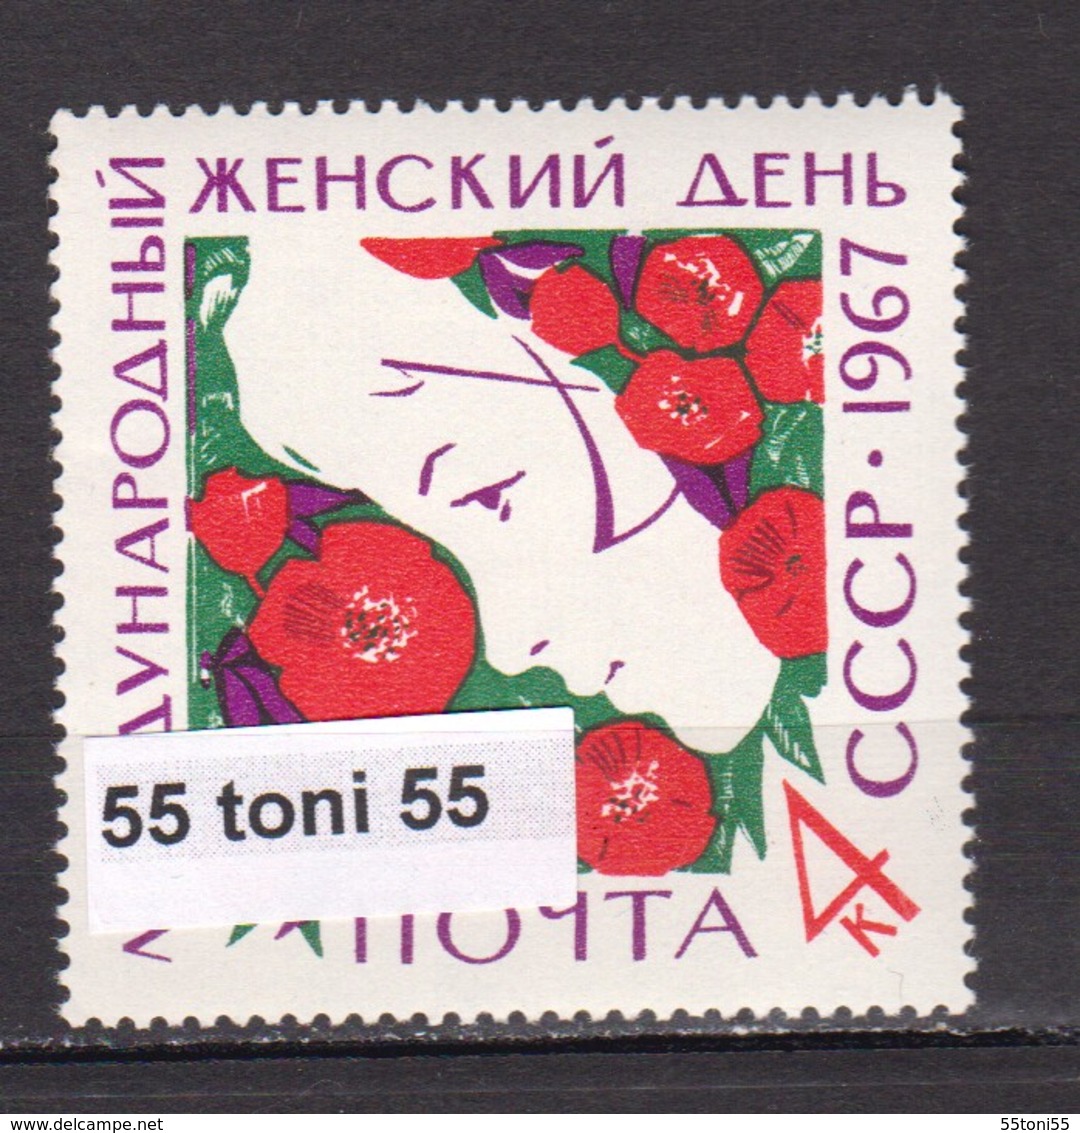 1967 International Women's Day, Mi 3324 1v.-MNH   USSR - Mother's Day